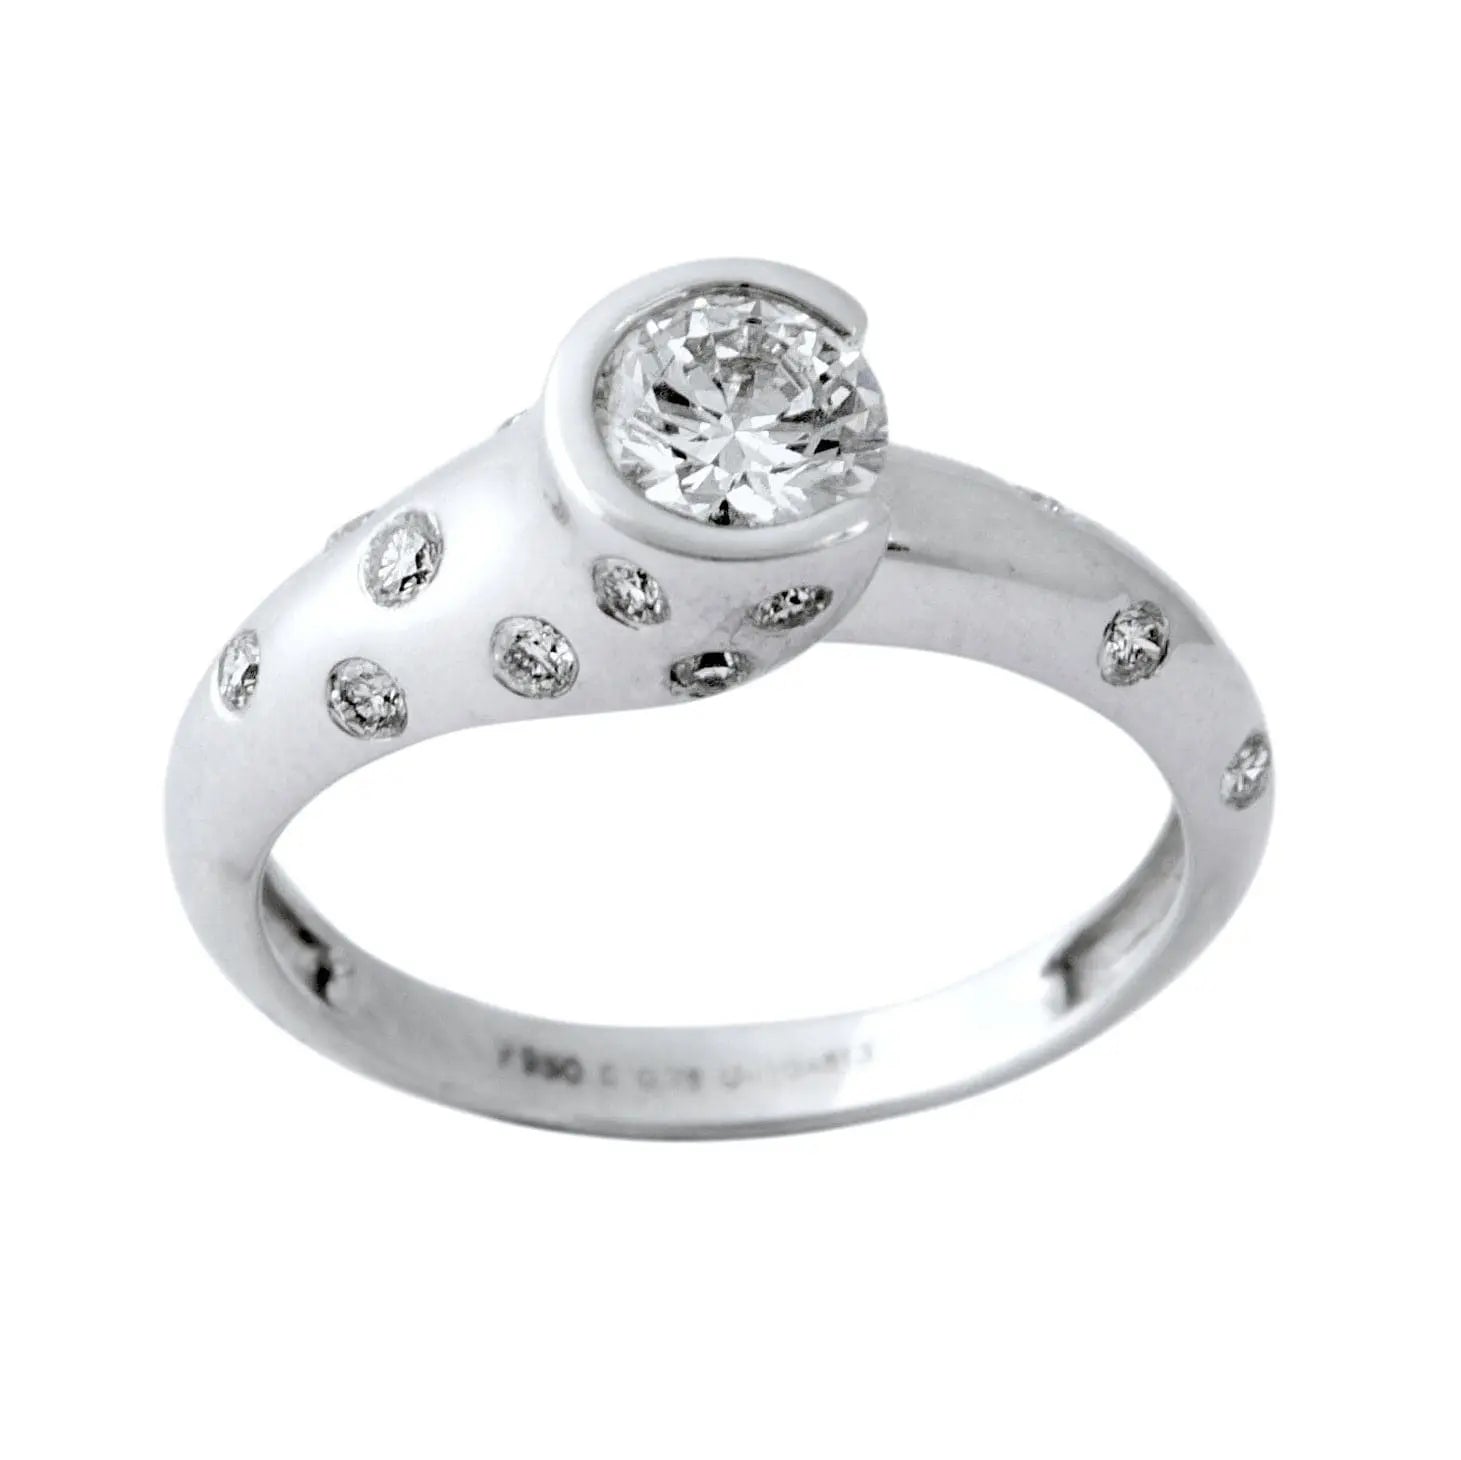 Round Brilliant Cut Diamond Engagement Rings Glasgow, Scotland